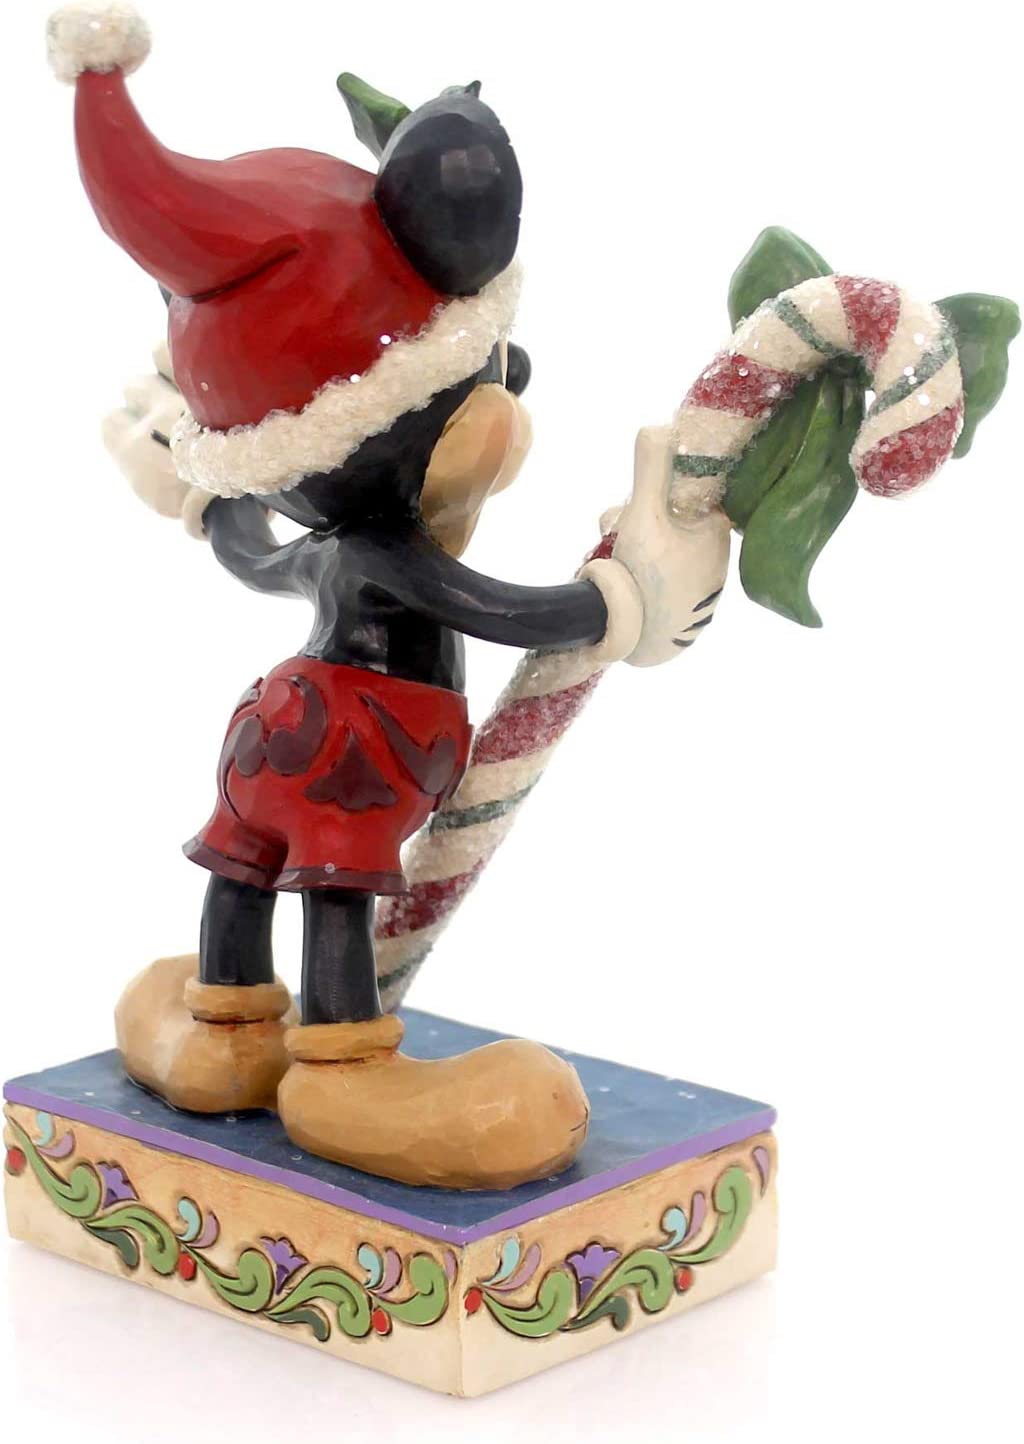 Mickey Mouse-Süße-Grüße"-Figur-Disney-by-Jim-Shore-berlindeluxe-maus-weihnachten-hinten